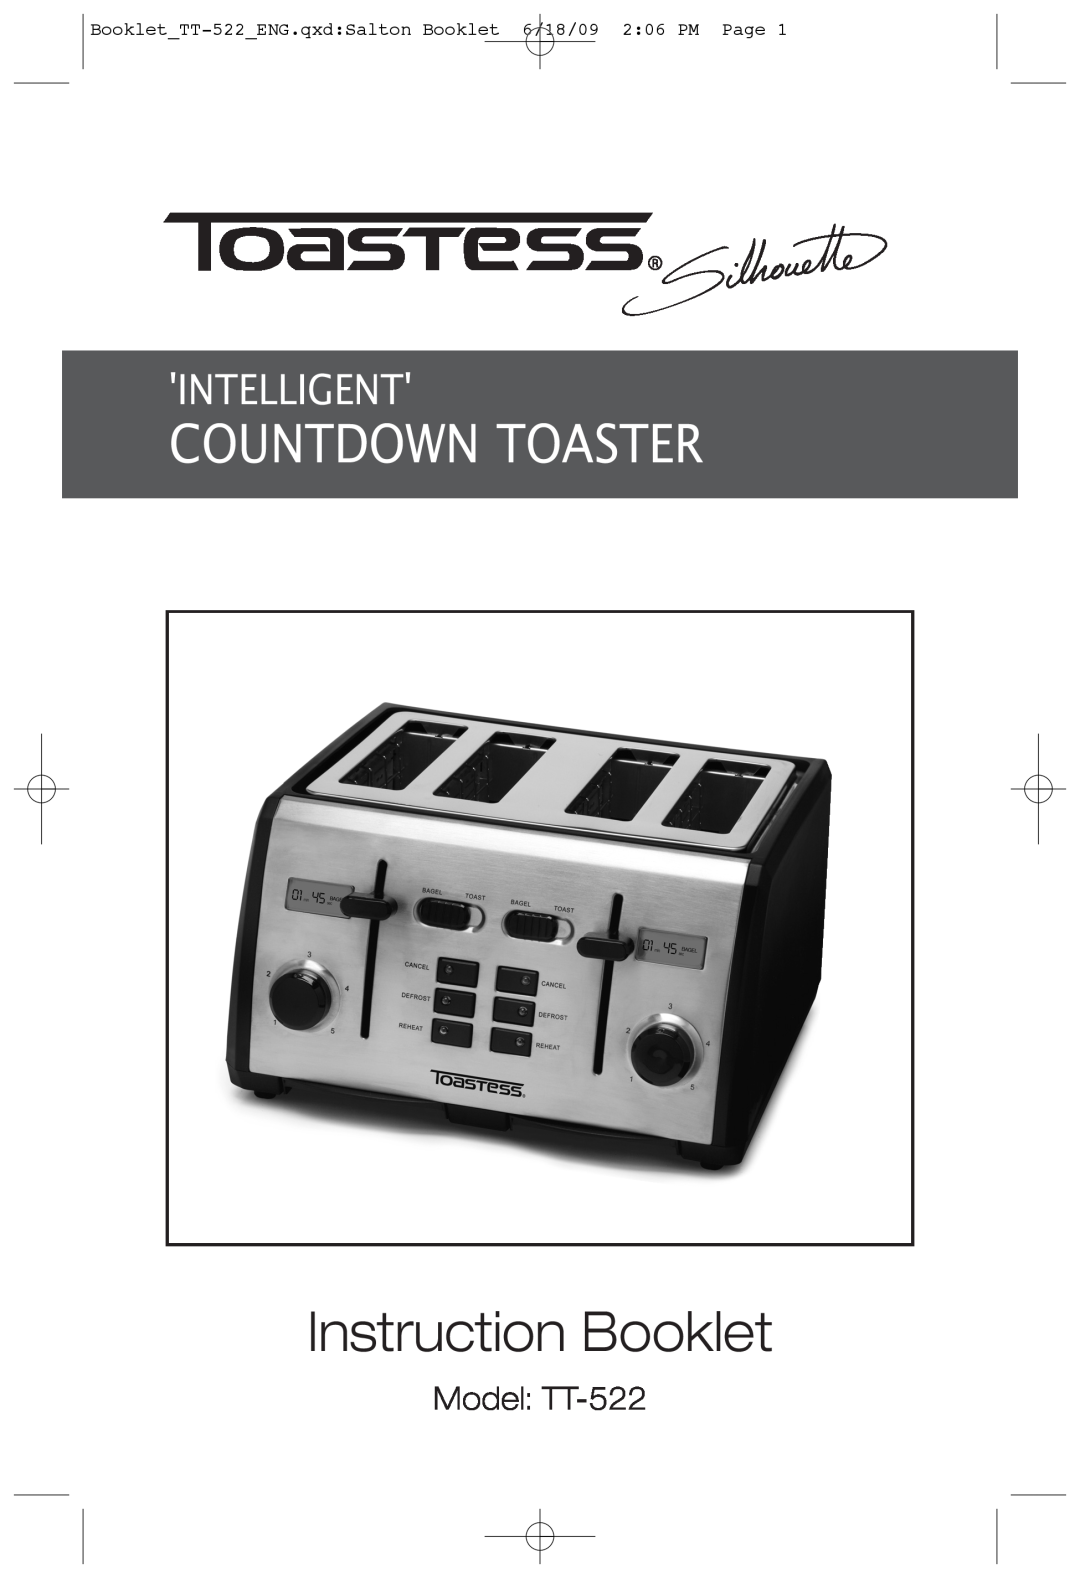 Toastess tt-522 manual Model TT-522, Instruction Booklet, Countdown Toaster, Intelligent 